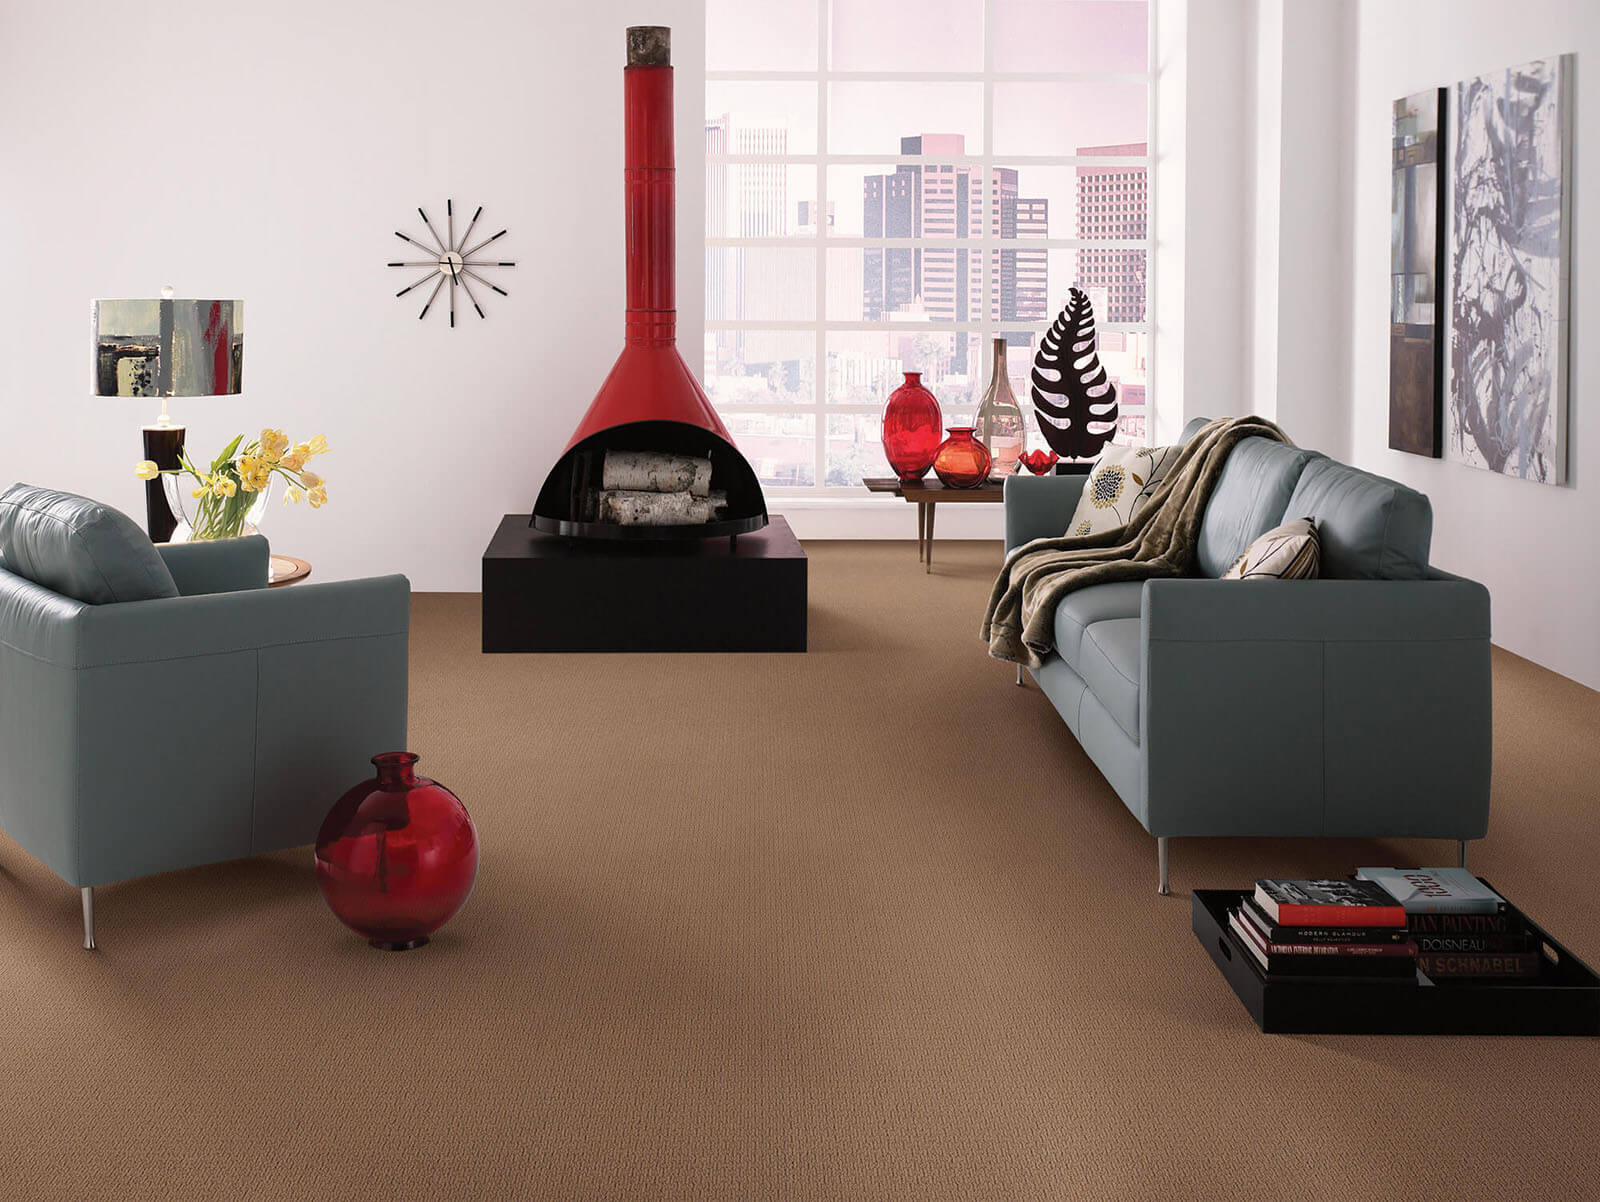 Carpet flooring in living room | The L&L Company